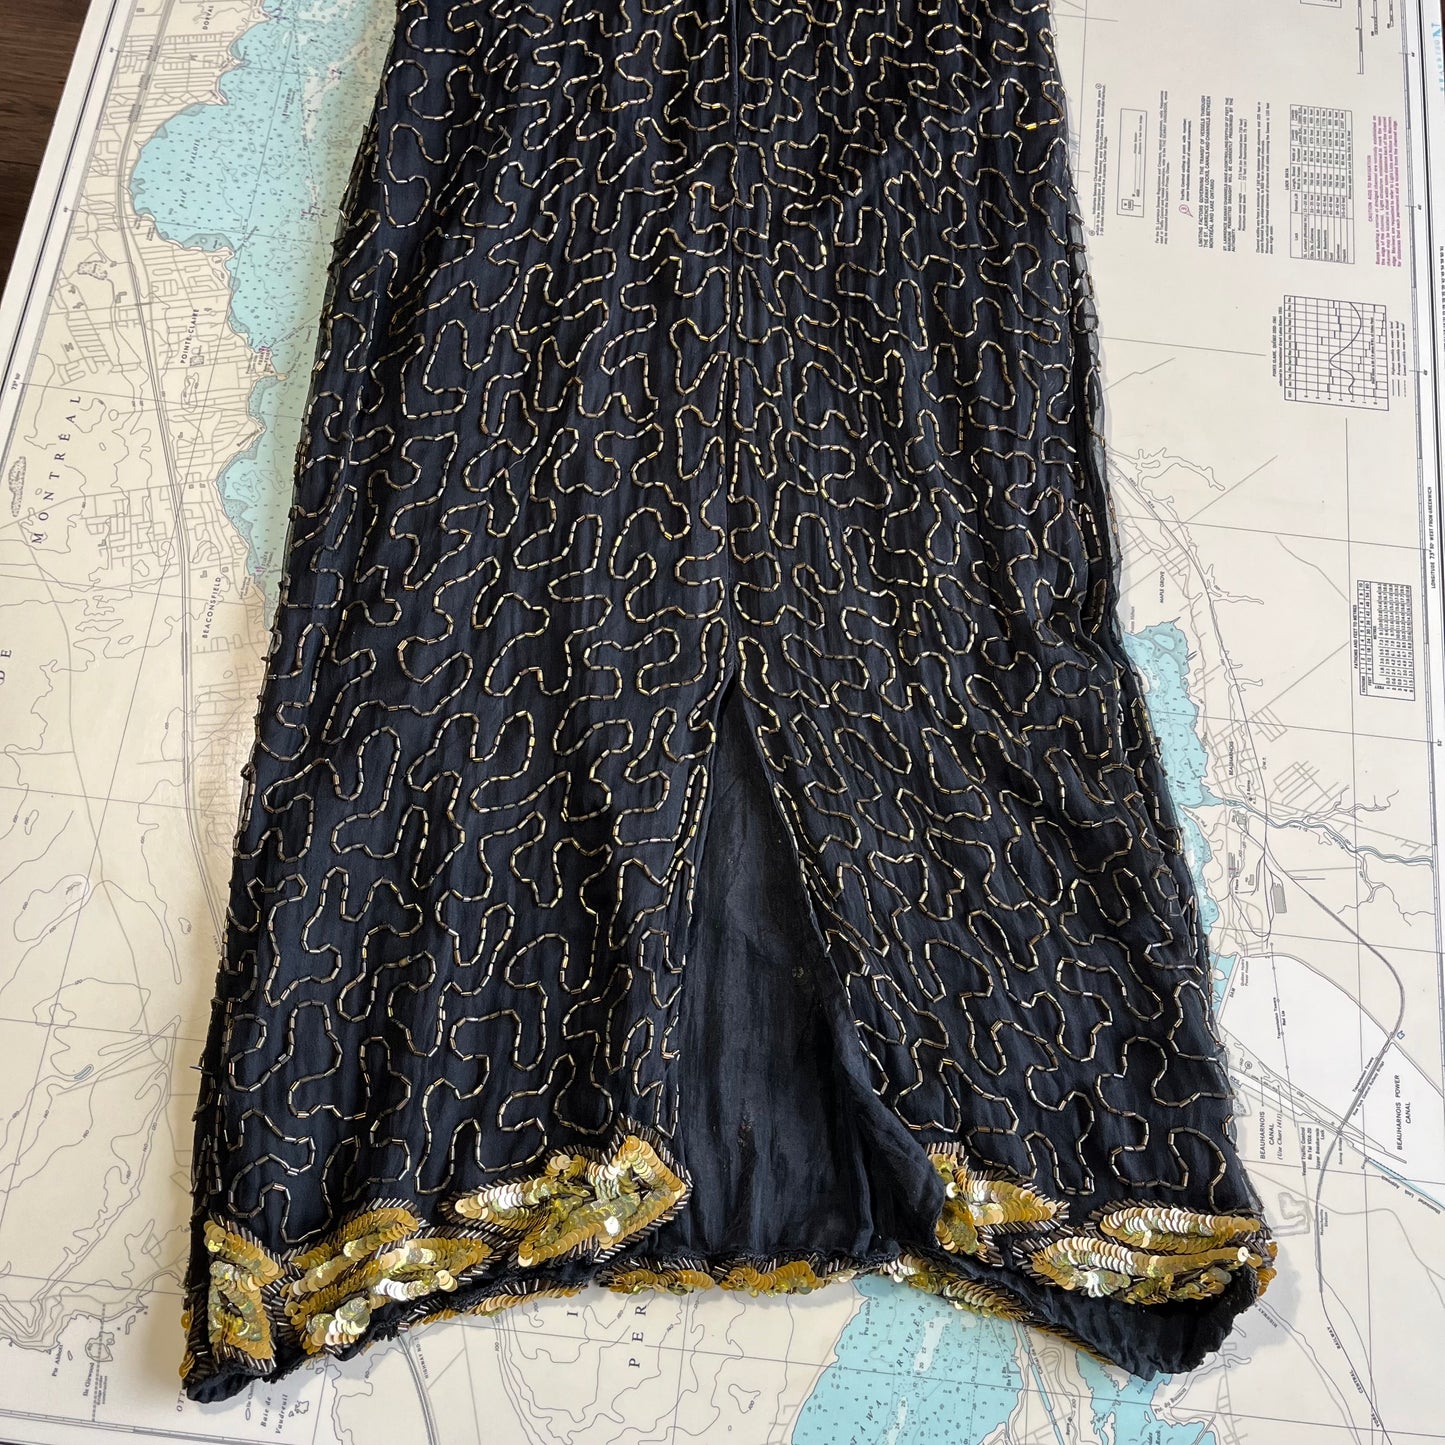 Vintage Mark & John II Silk Beaded Dress with Jacket